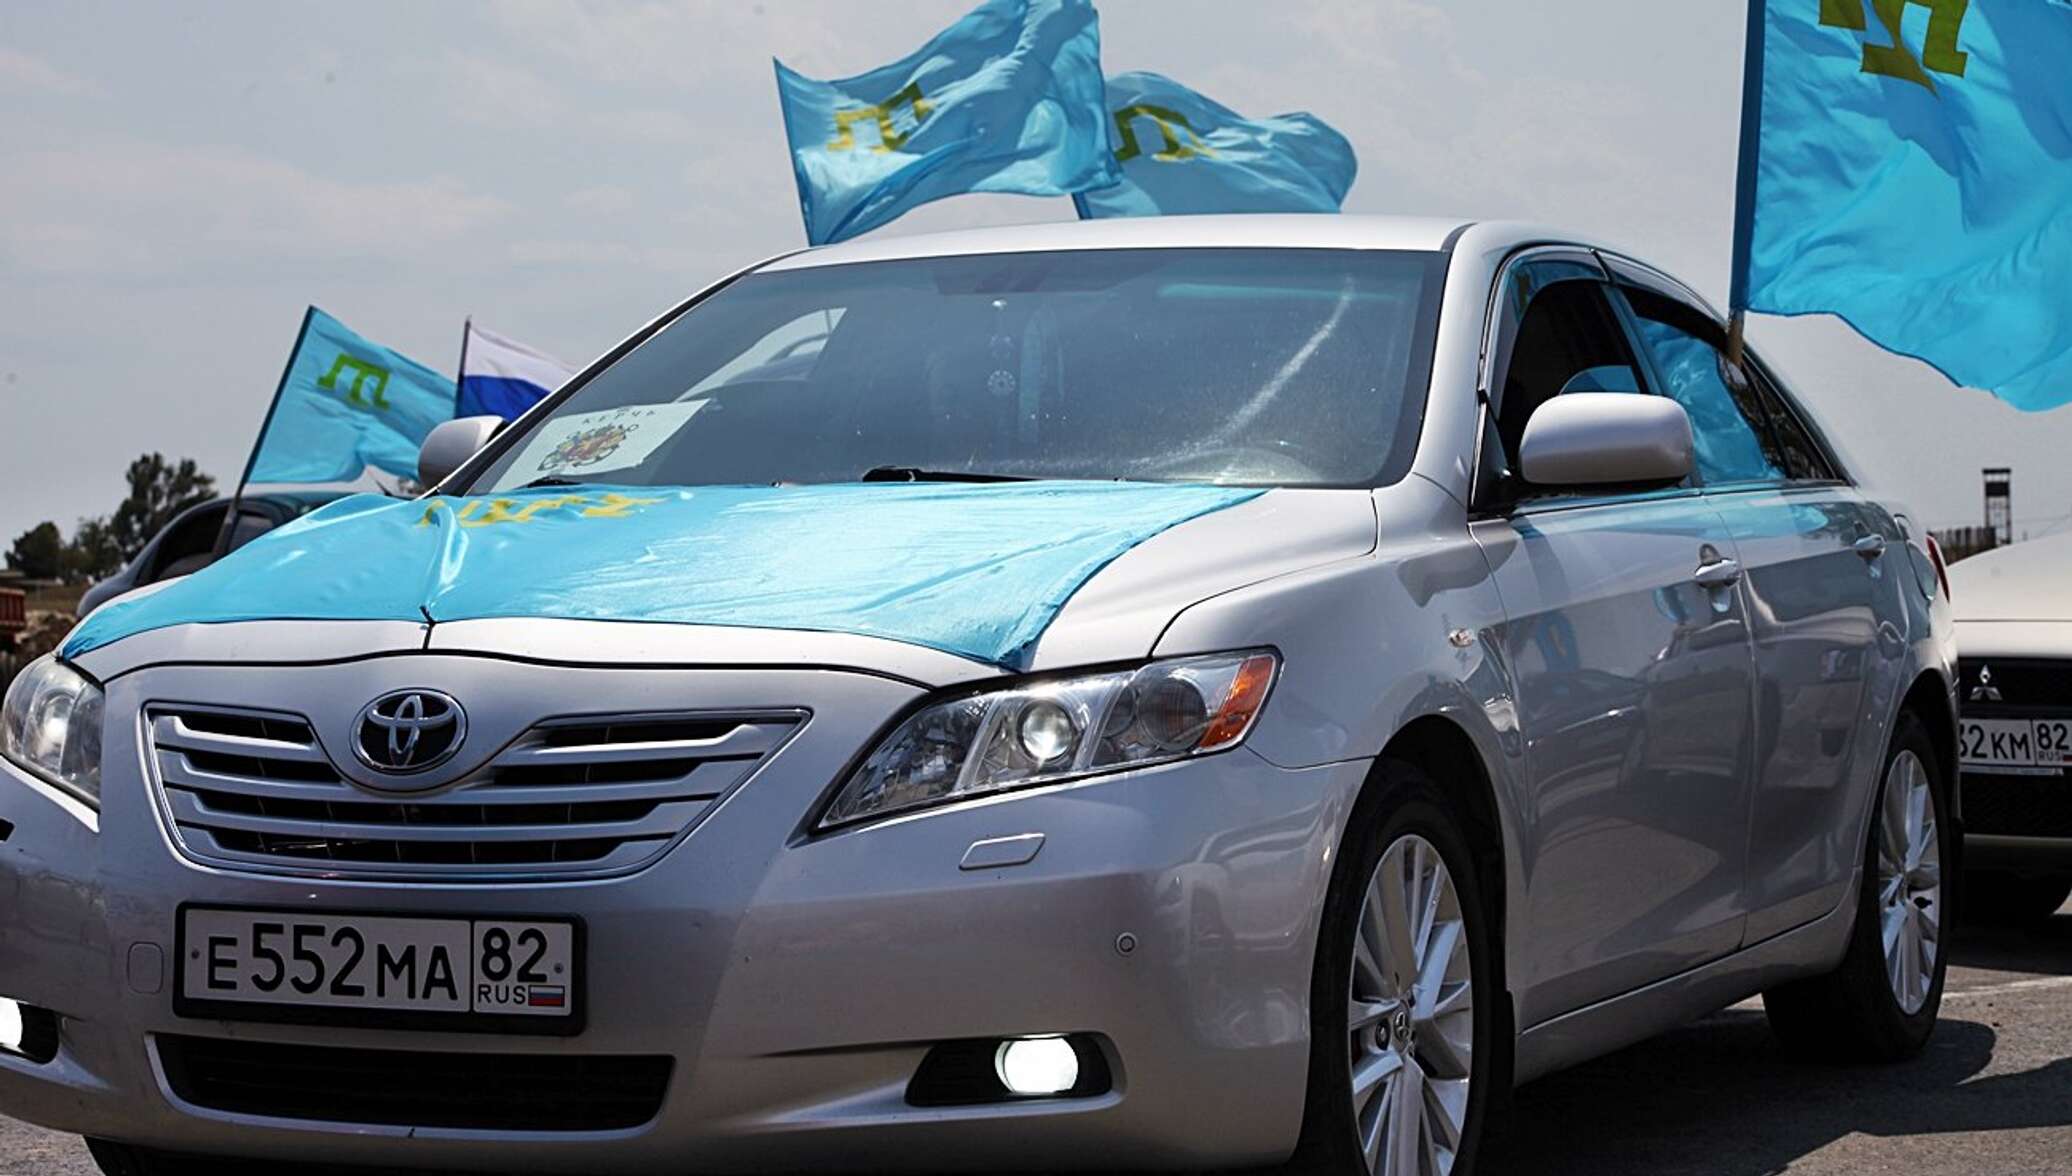 Машина с крымскотатарским флагом